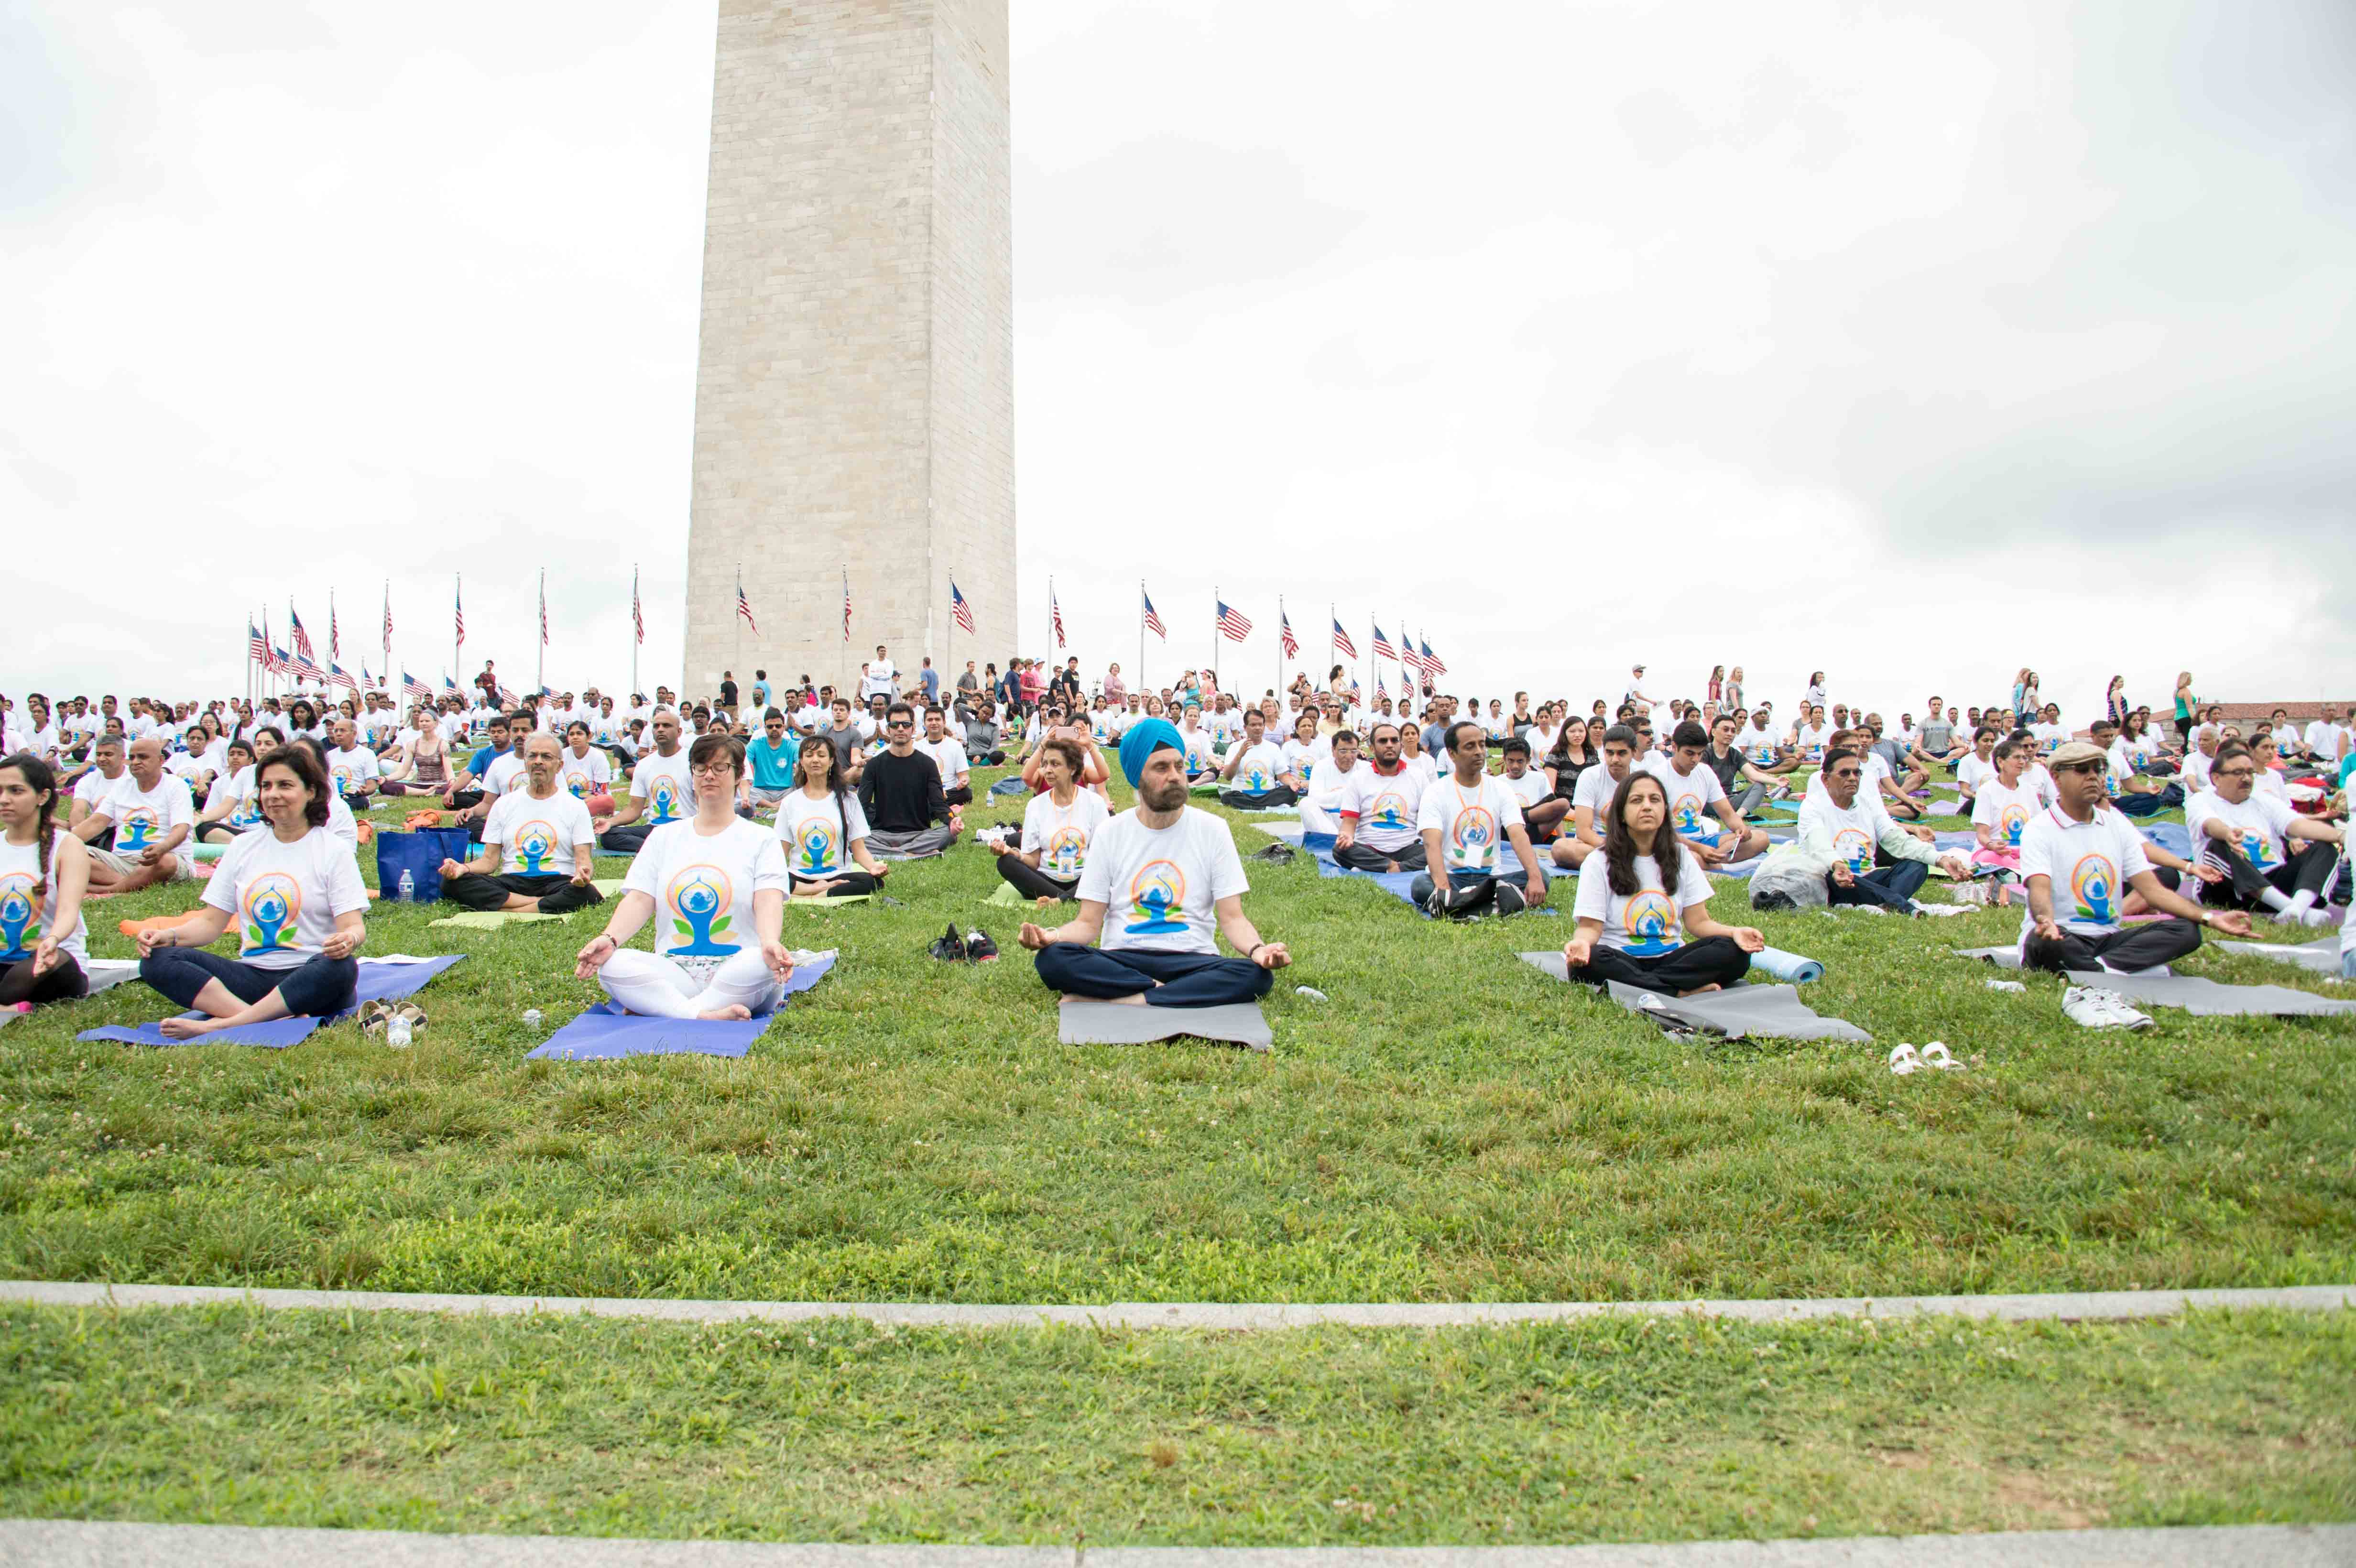 Thousands gather to celebrated third International Yoga Day in Washington D.C.